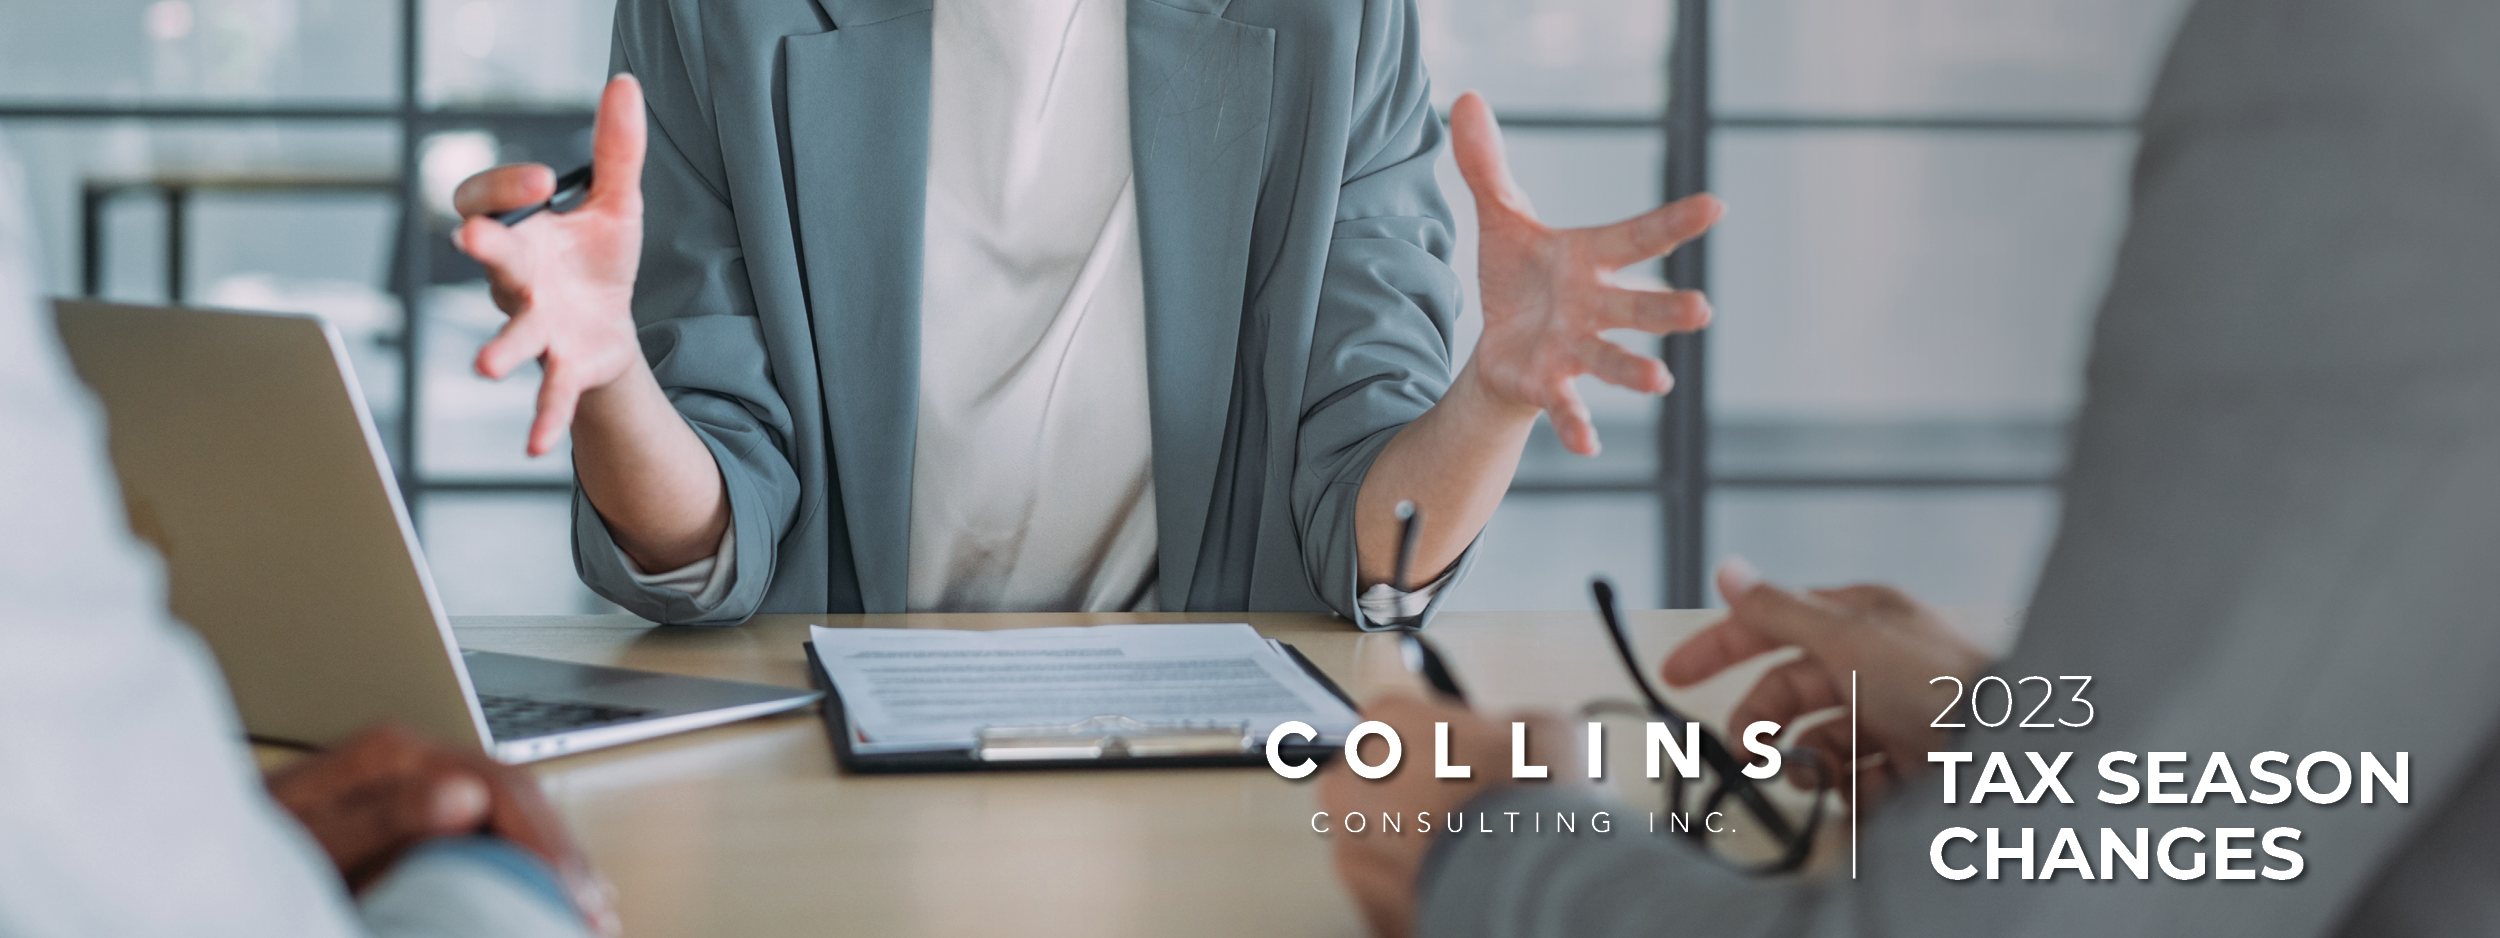 Collins 2023 Tax Season Changes